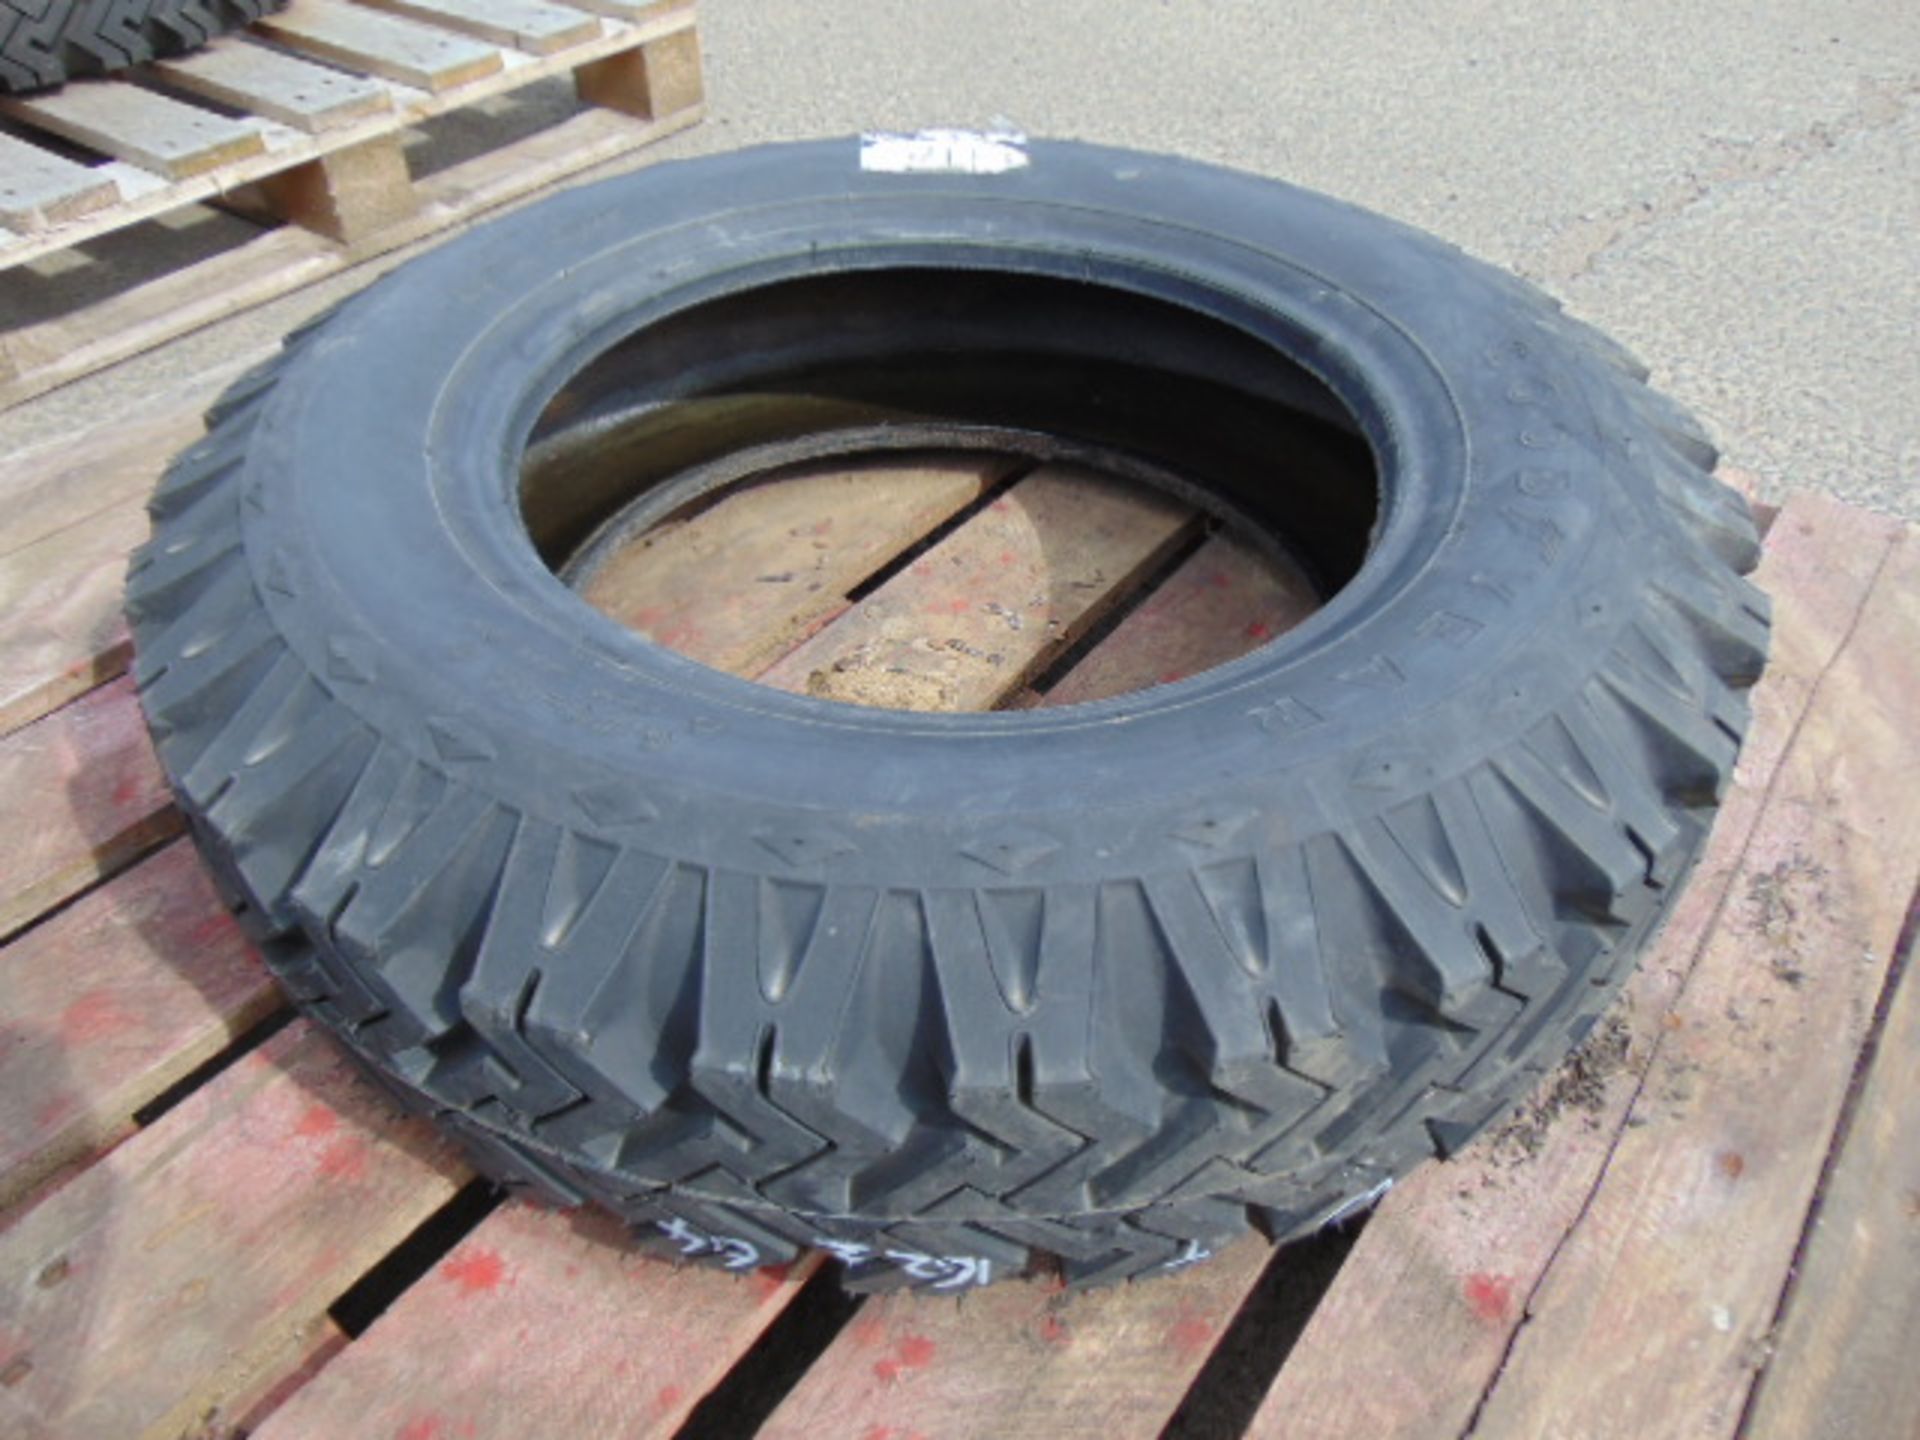 1 x Goodyear 6.50-16 Xtra Grip Tyre